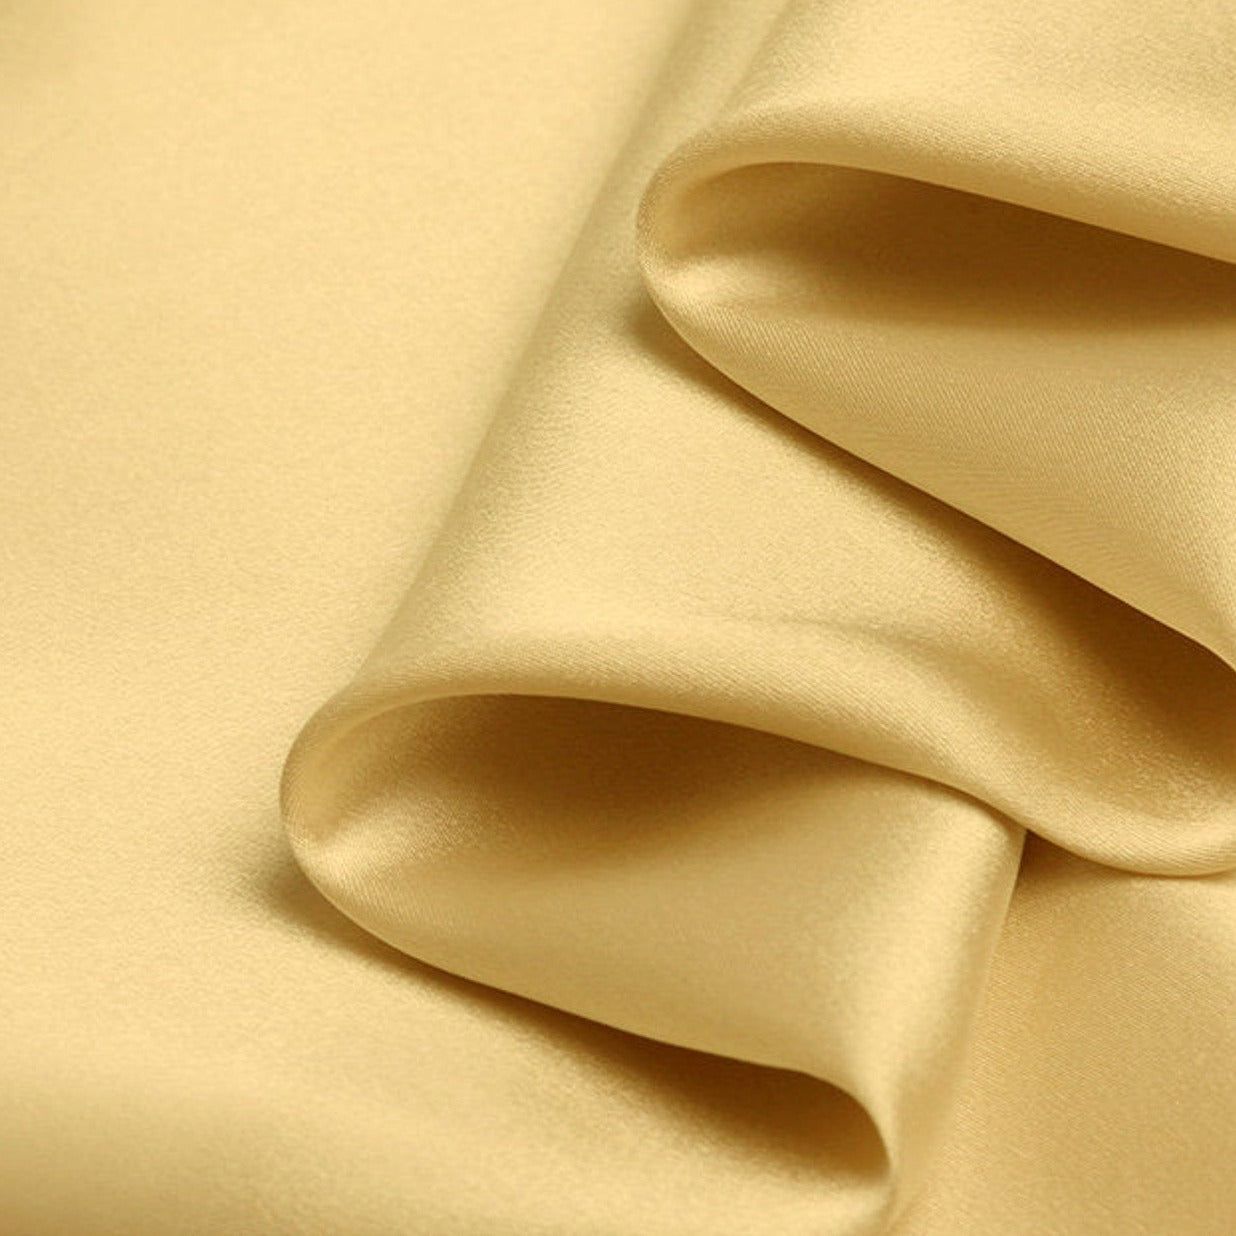 Satin Pillowcase - Multiple Colors